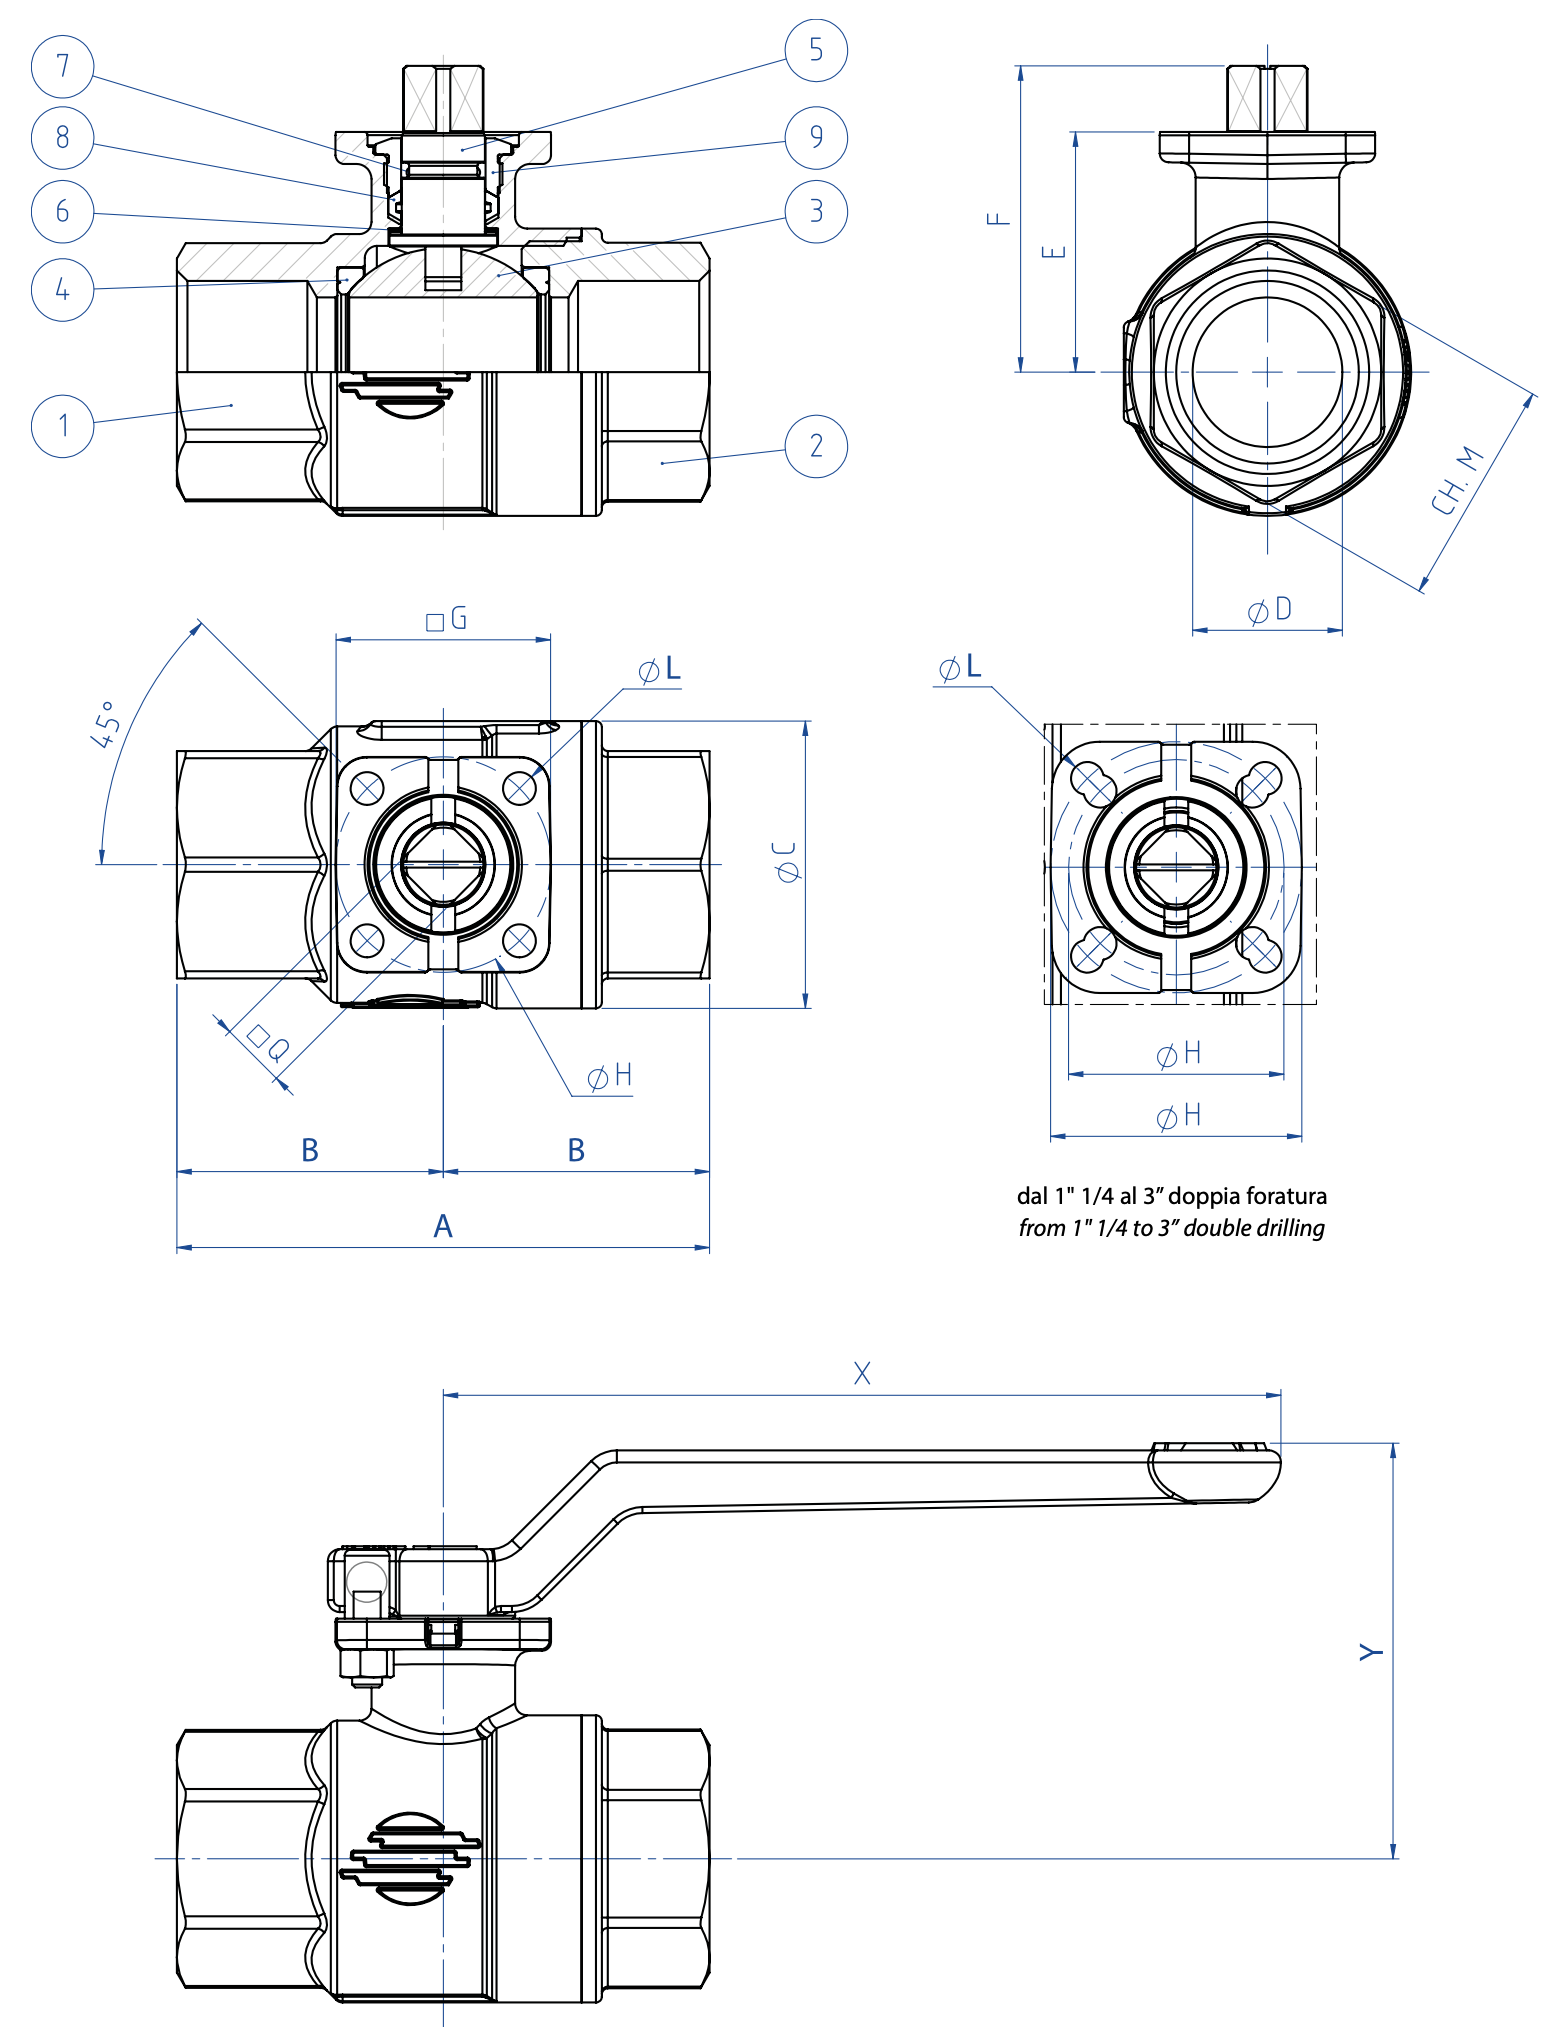 Item 101 brass ball valve - dimensions - 